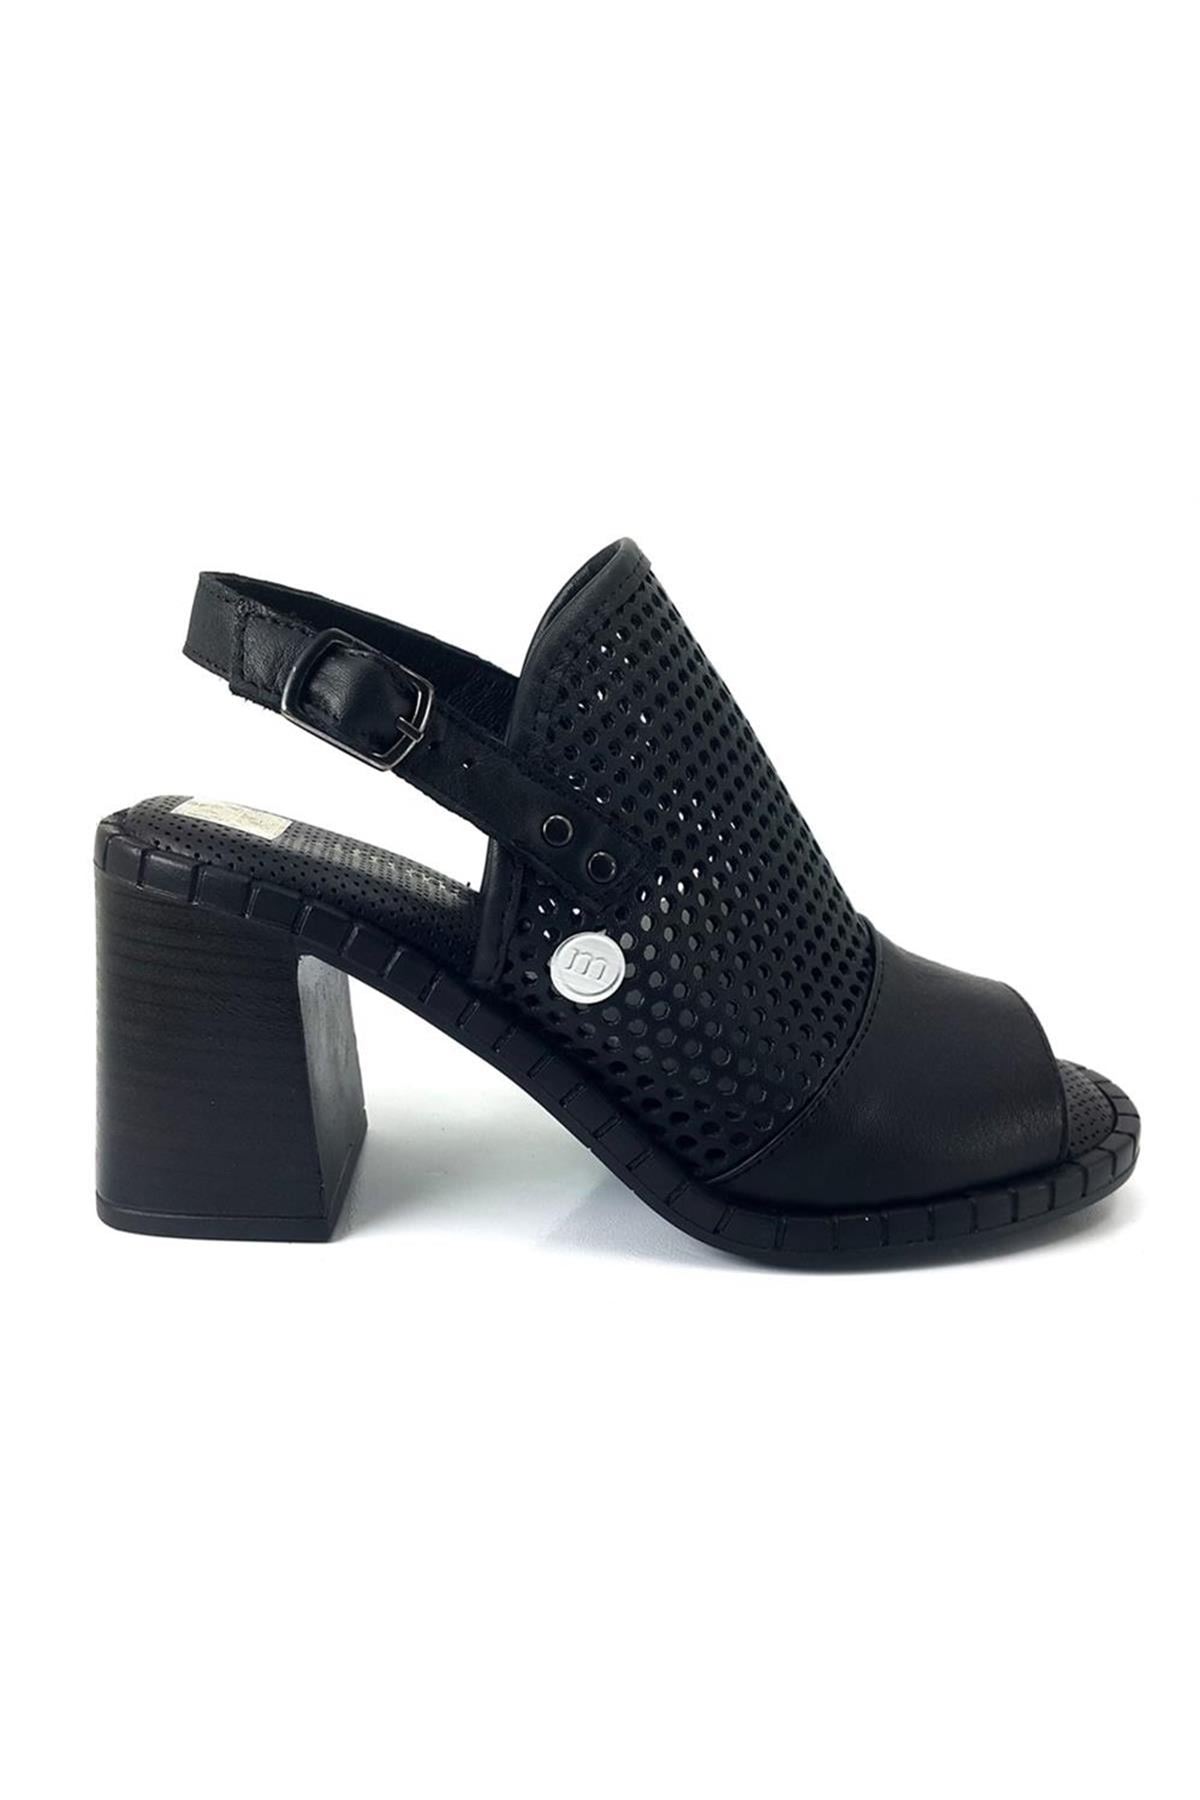 Mammamia D23YS-1425 Hakiki Deri Kadın Sandalet - Siyah